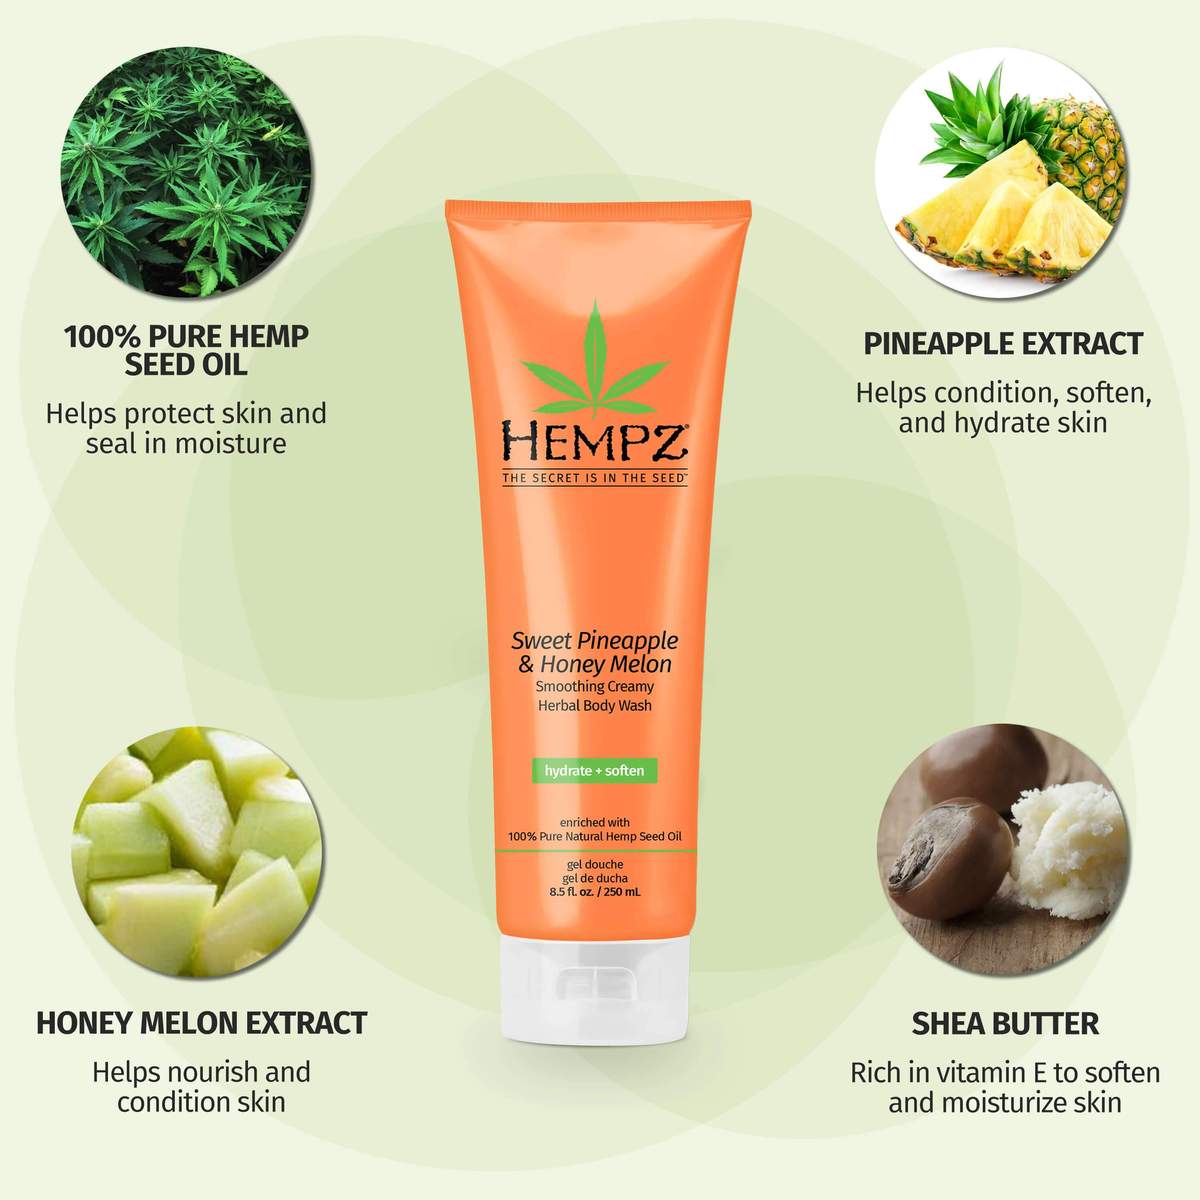 Hempz Herbal Body Wash Sweet Pineapple & Honey Melon Scent 8.5 fl.oz.-Hempz-BB_Bath and Shower,BB_Body Wash,Brand_Hempz,Collection_Bath and Body,Hempz_ Body Wash